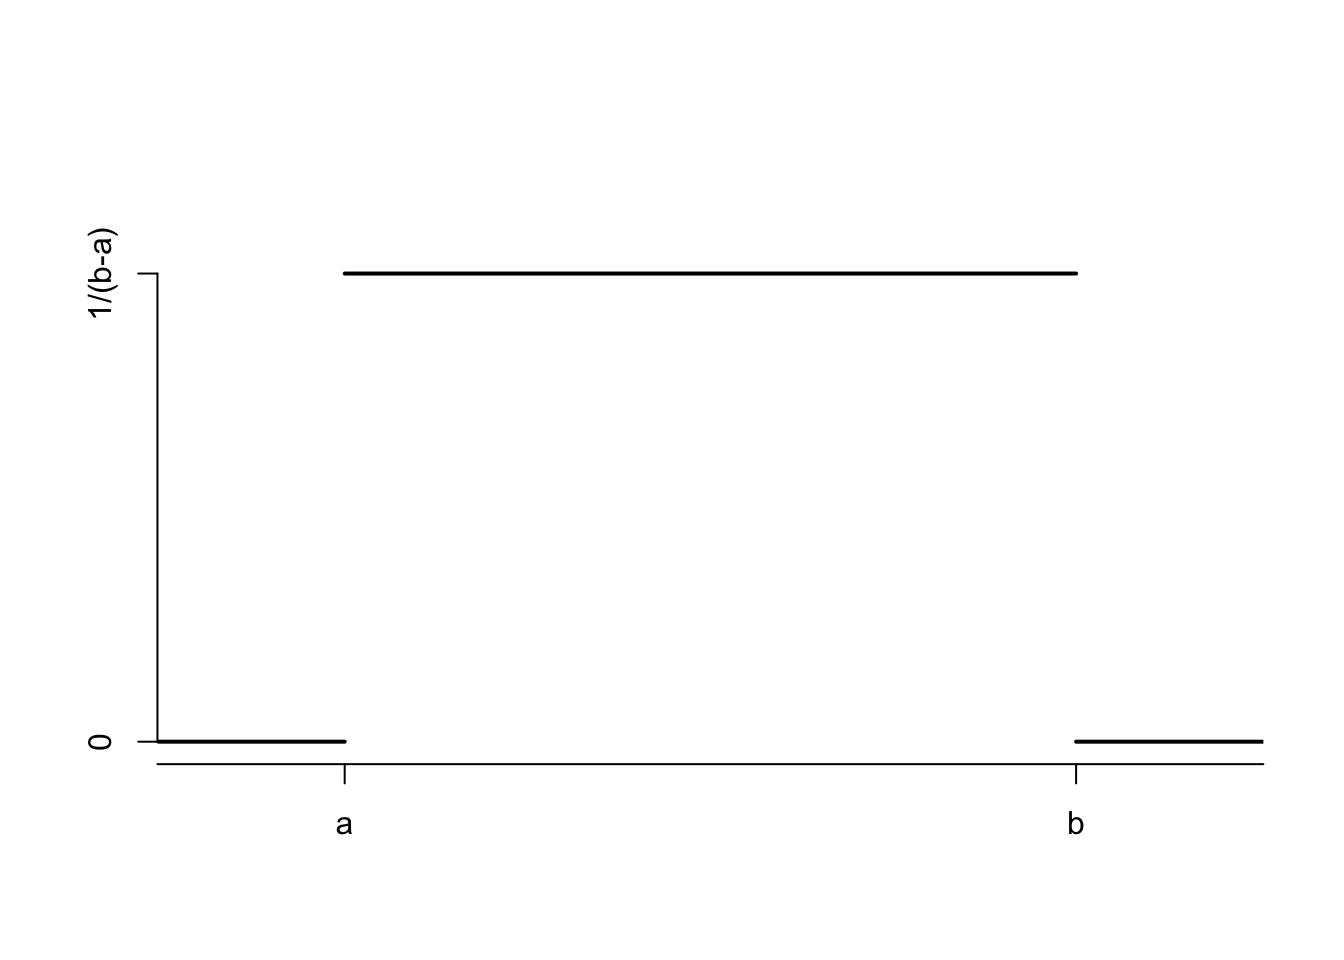 PDF of a continuous uniform random variable on $[a,b]$.